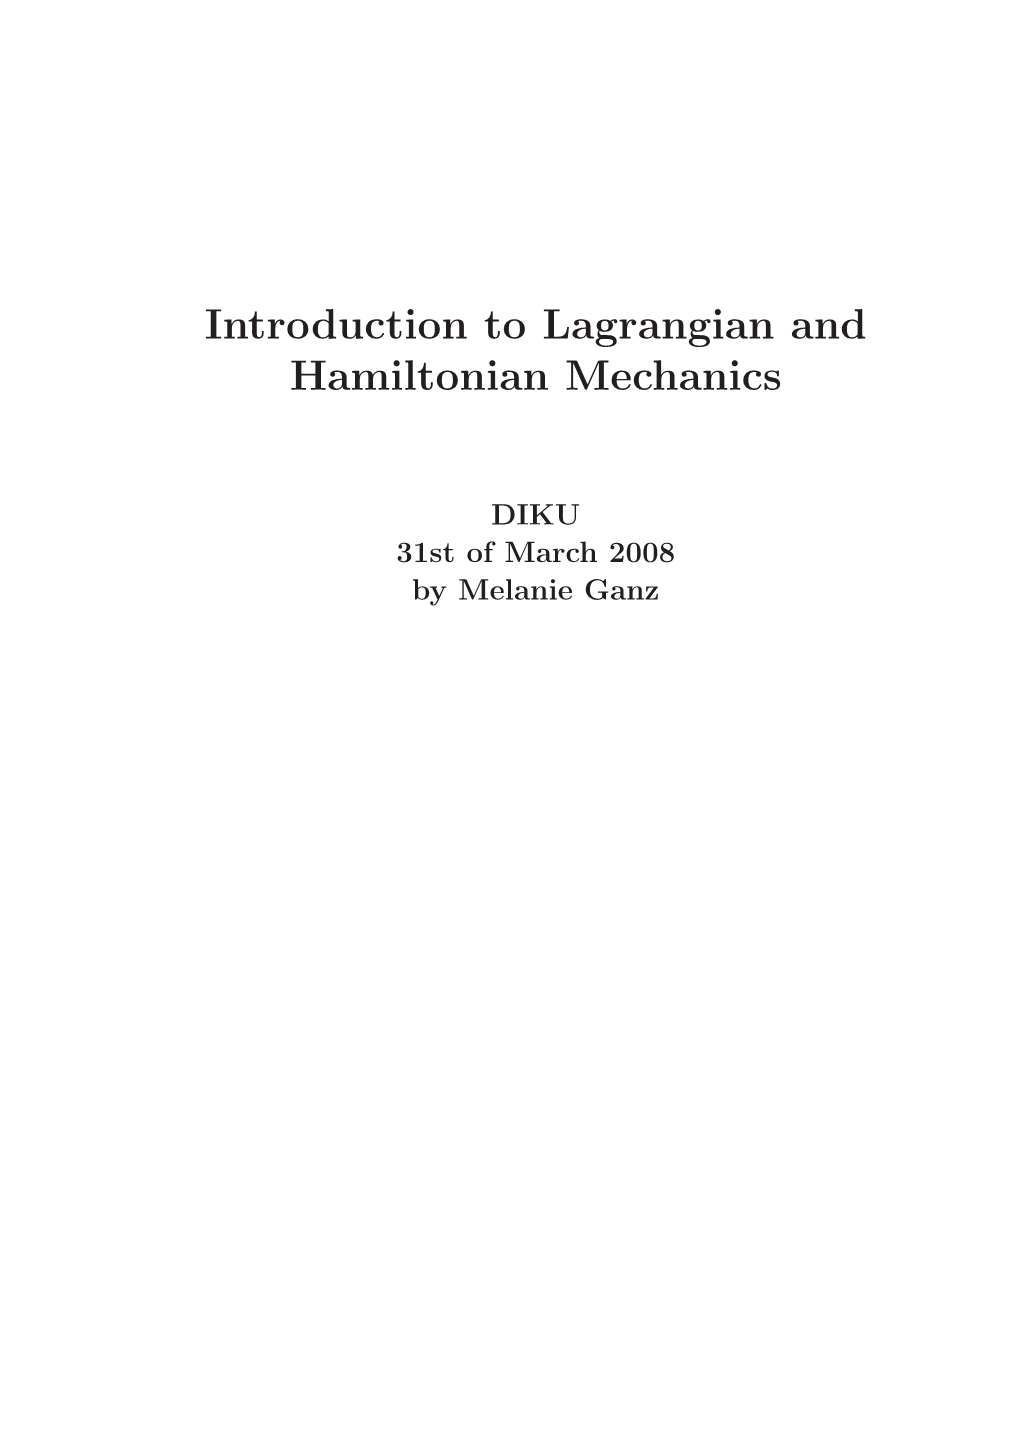 Introduction to Lagrangian and Hamiltonian Mechanics